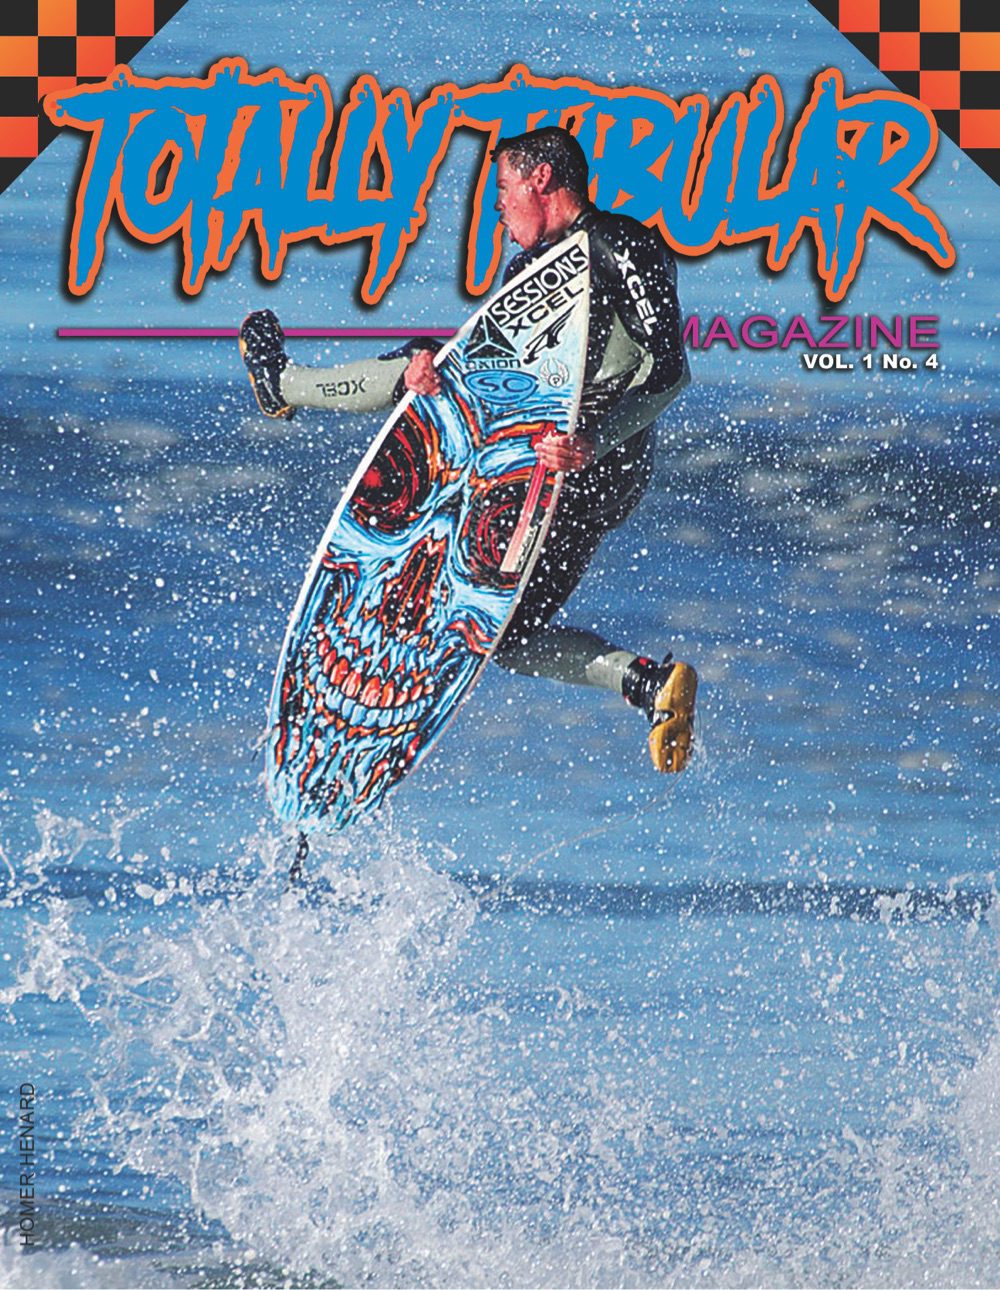 Totally Tubular Magazine Issue 4 cover with Homer Henard